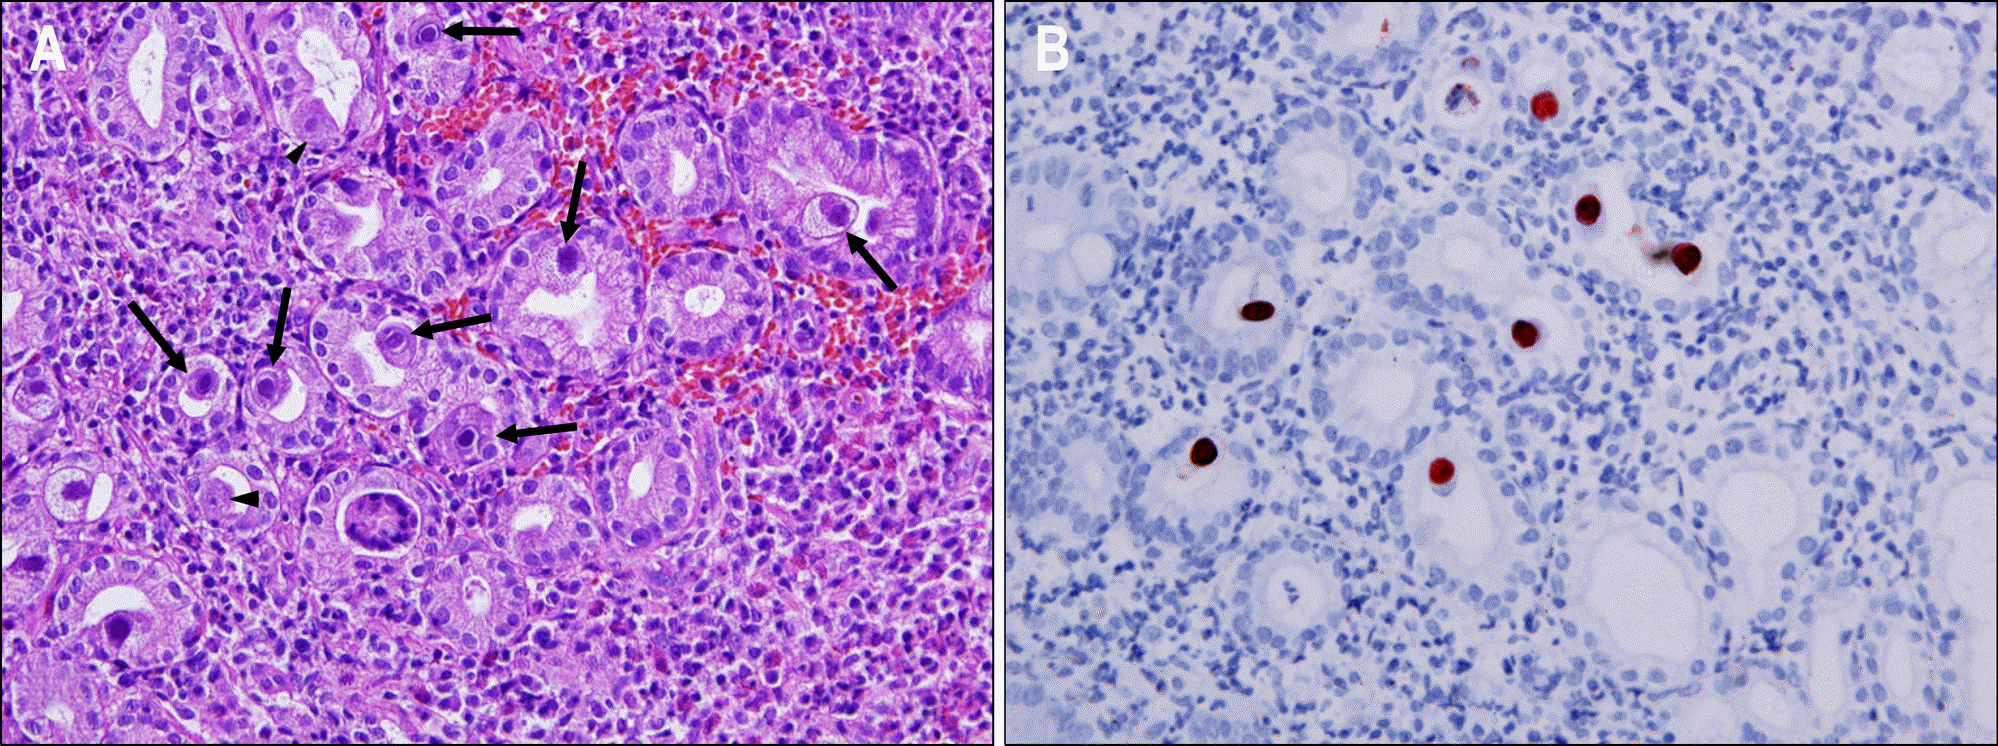 reed sternberg cells vs cmv